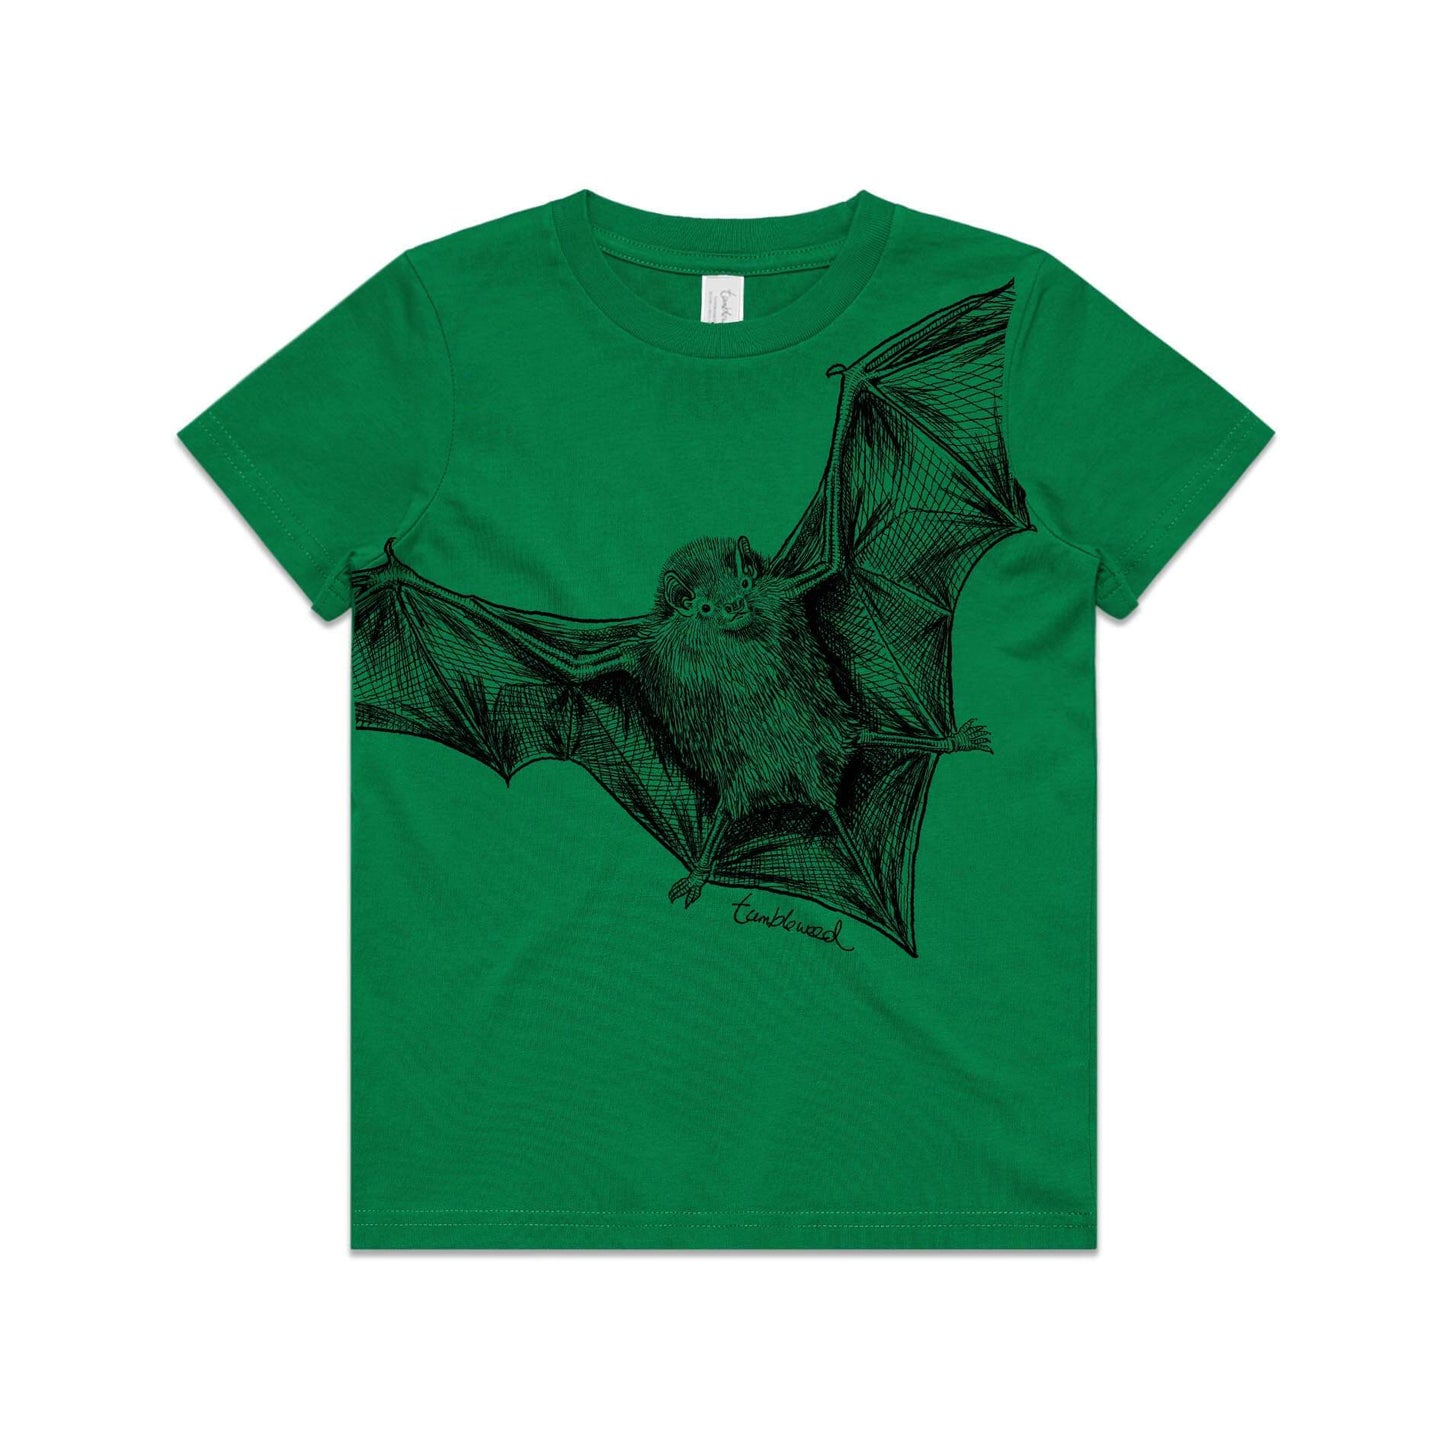 Green, cotton kids' t-shirt with screen printed Kids bat design.